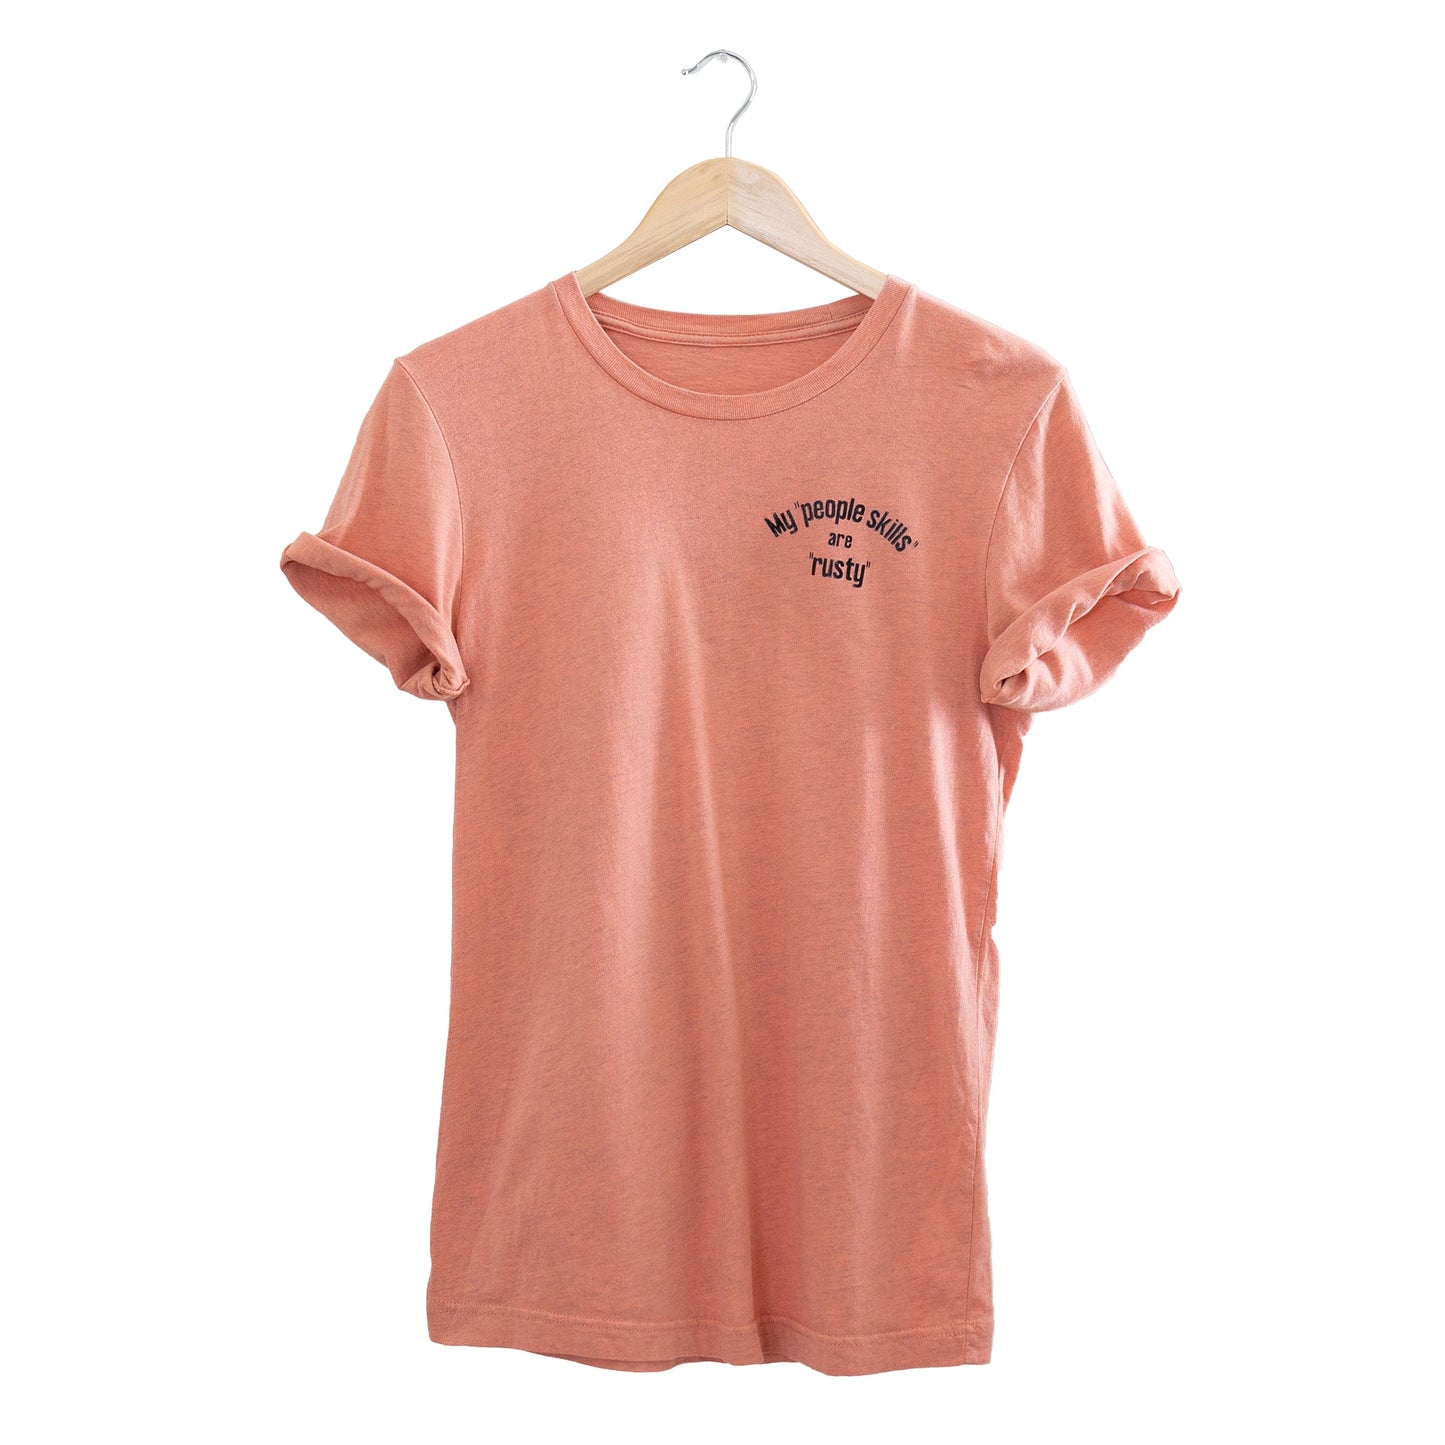 My "people skills" are "rusty" t-shirt - Sunset Pink w/ black